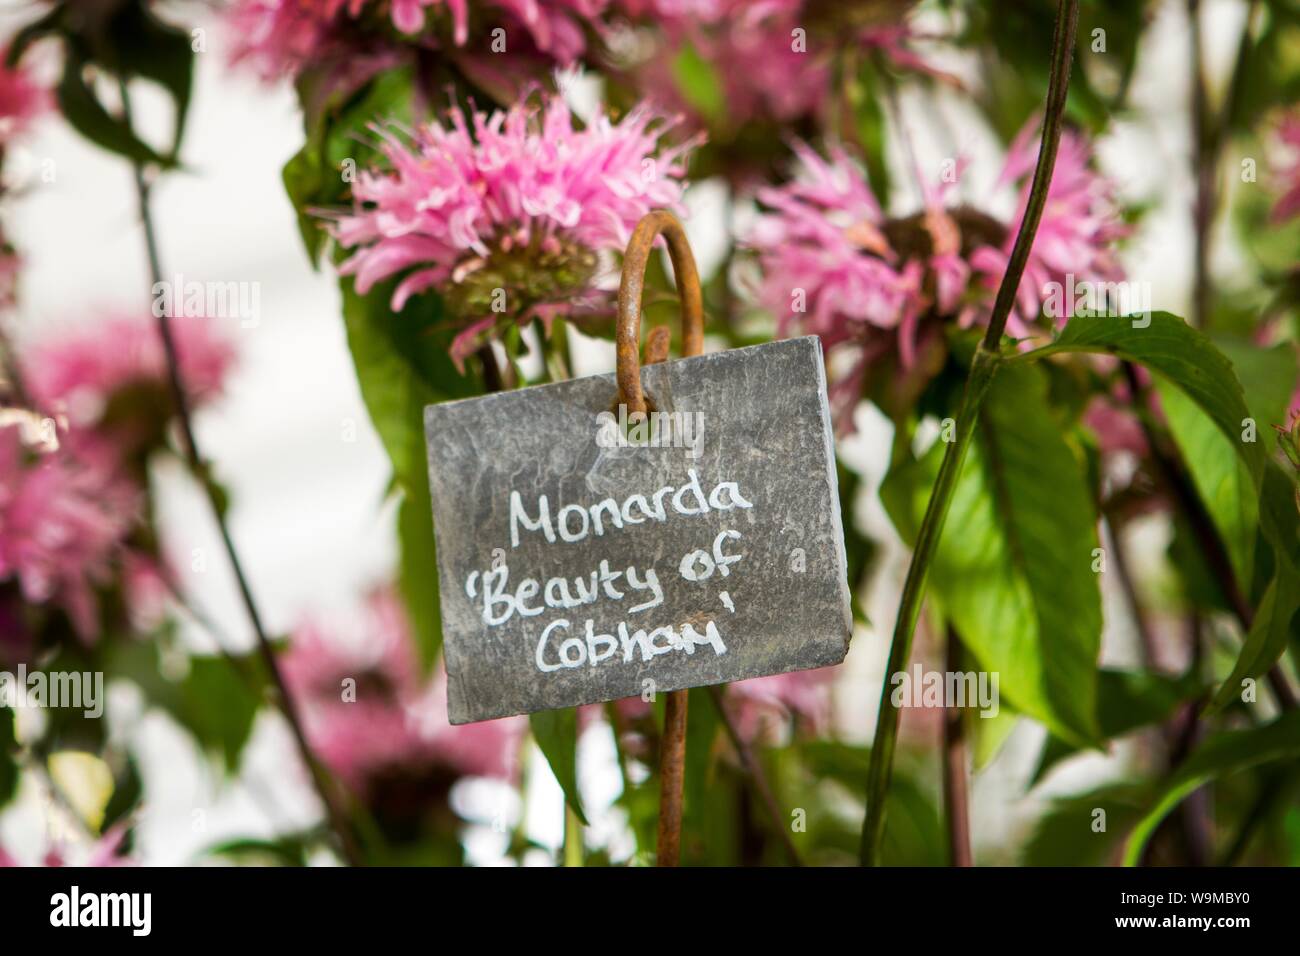 a monarda beauty of cobham garden gardening plant plants gardens Stock Photo